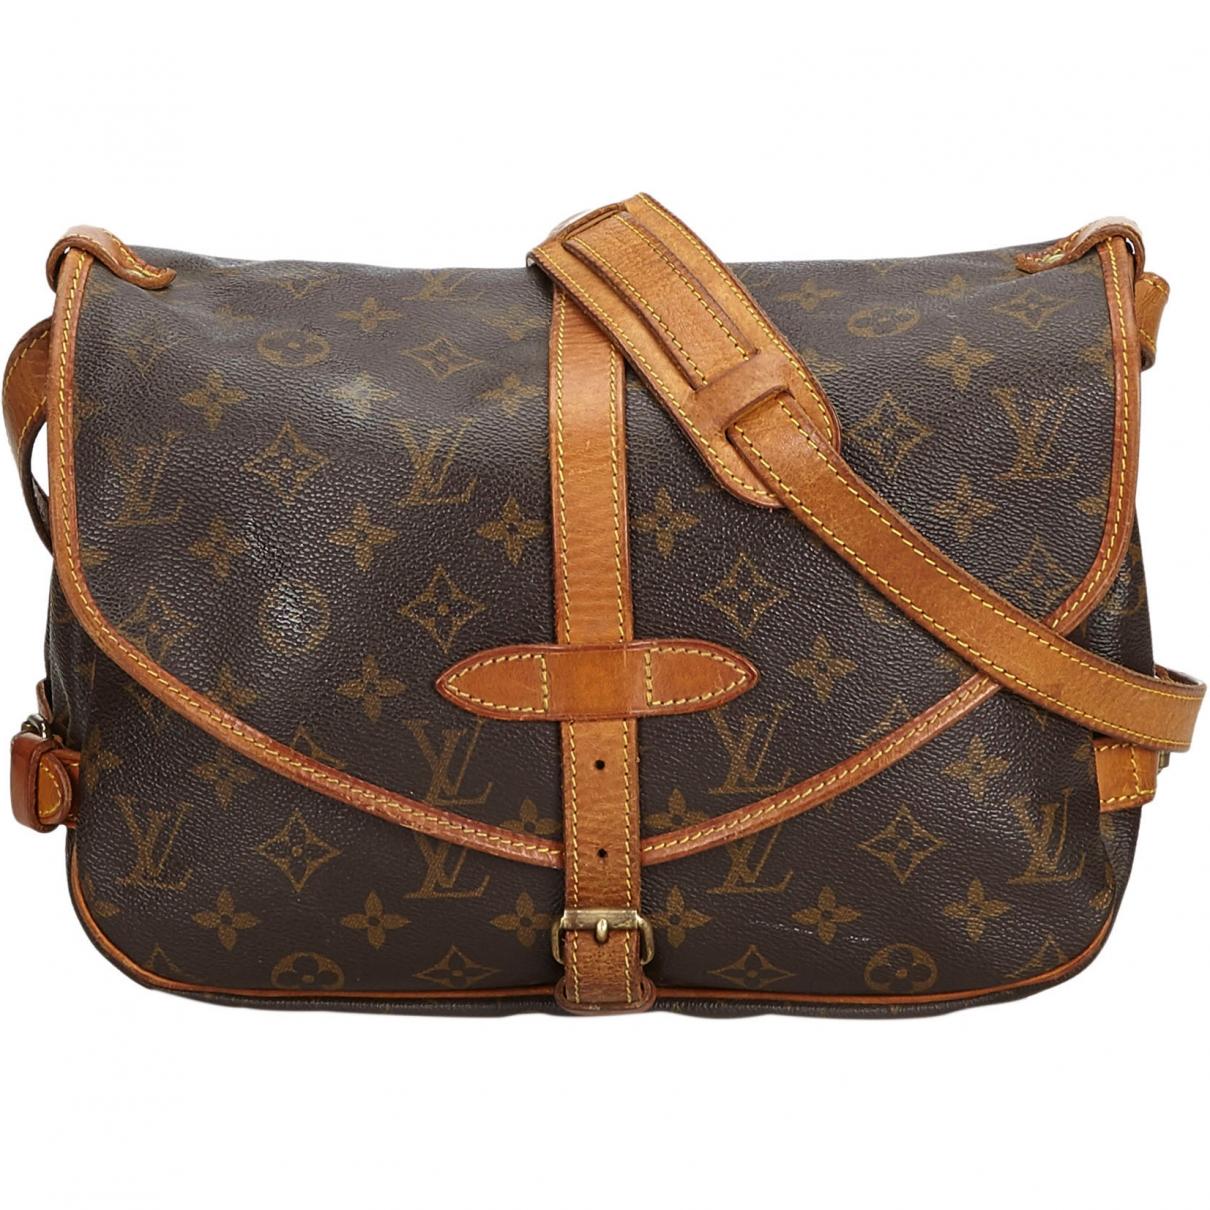 Lyst - Louis Vuitton Saumur Cloth Handbag in Brown